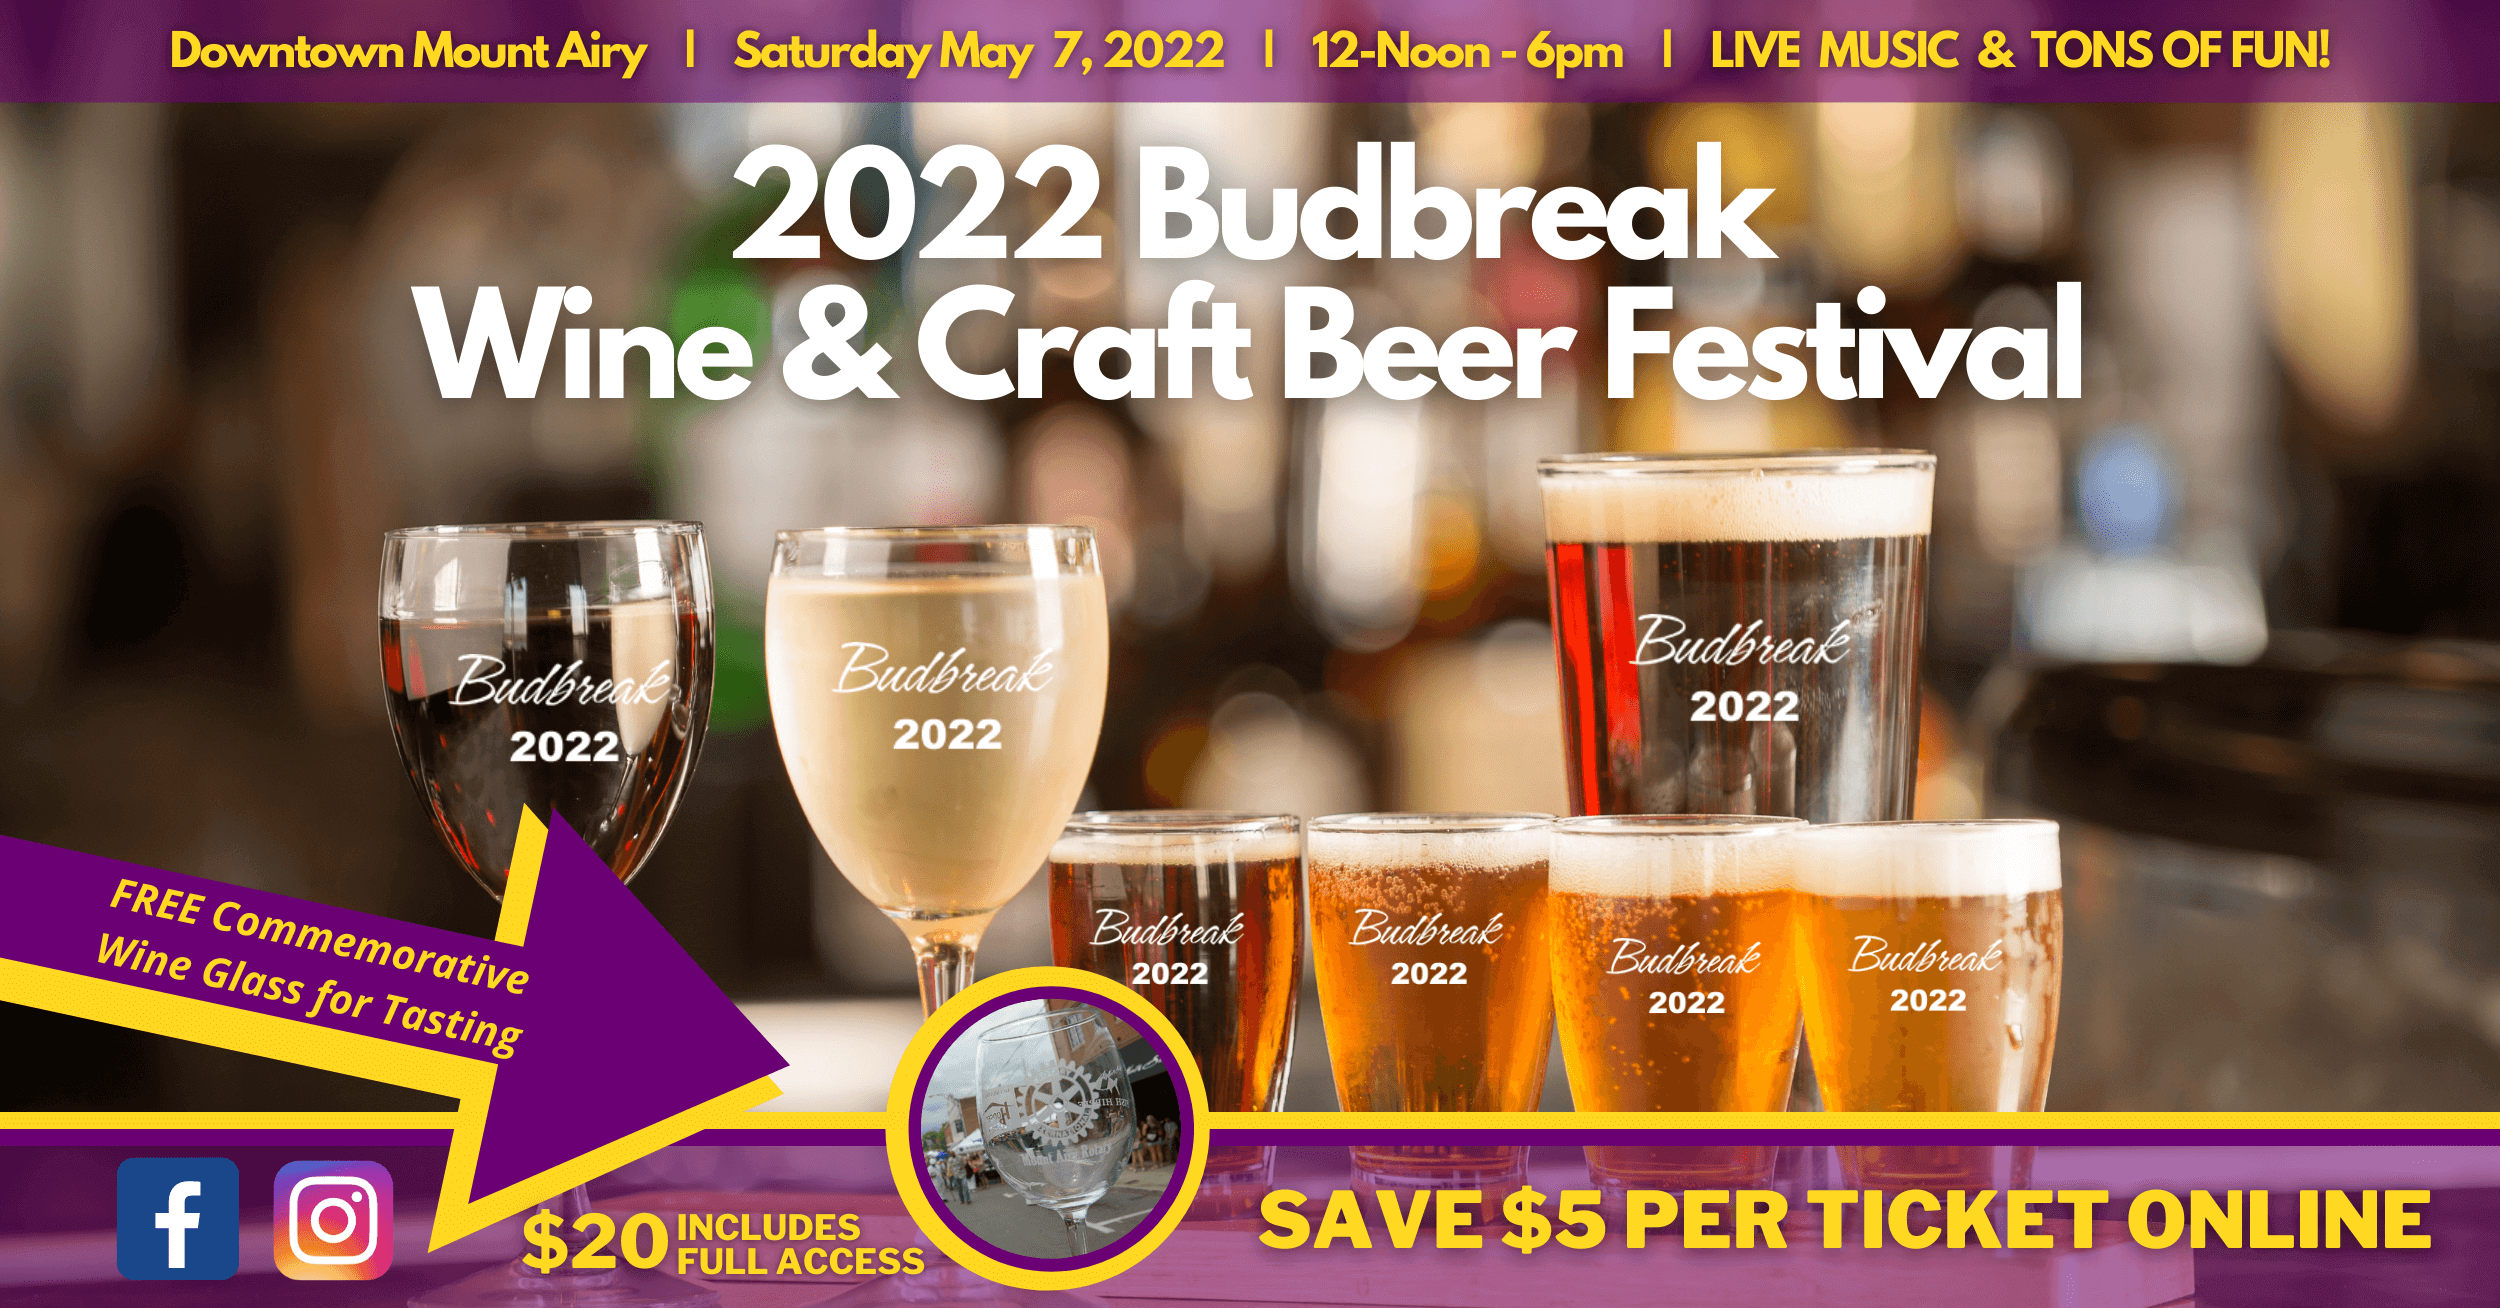 2019 Budbreak Wine and Craft Beer Festival